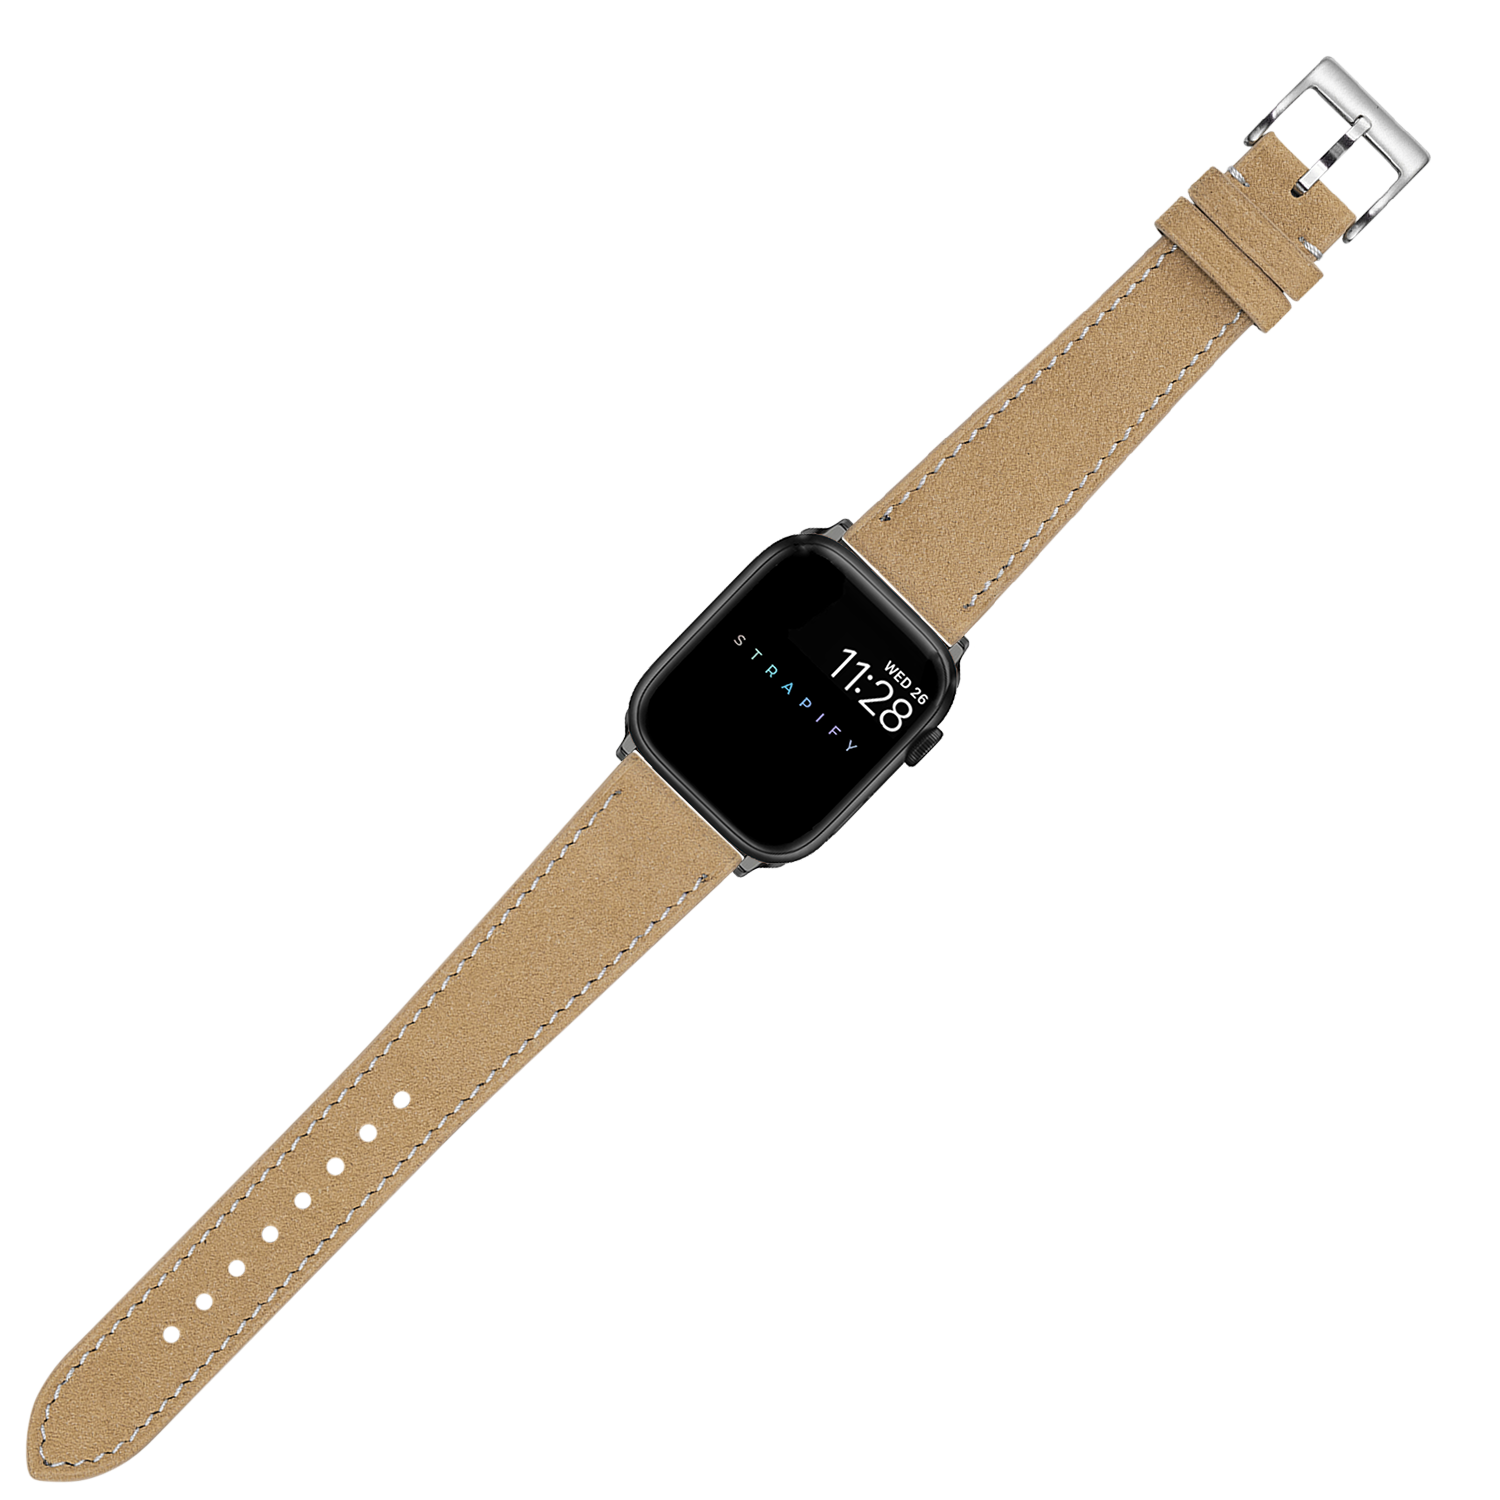 [Apple Watch] Alcantara Leather - Brown | White Stitching